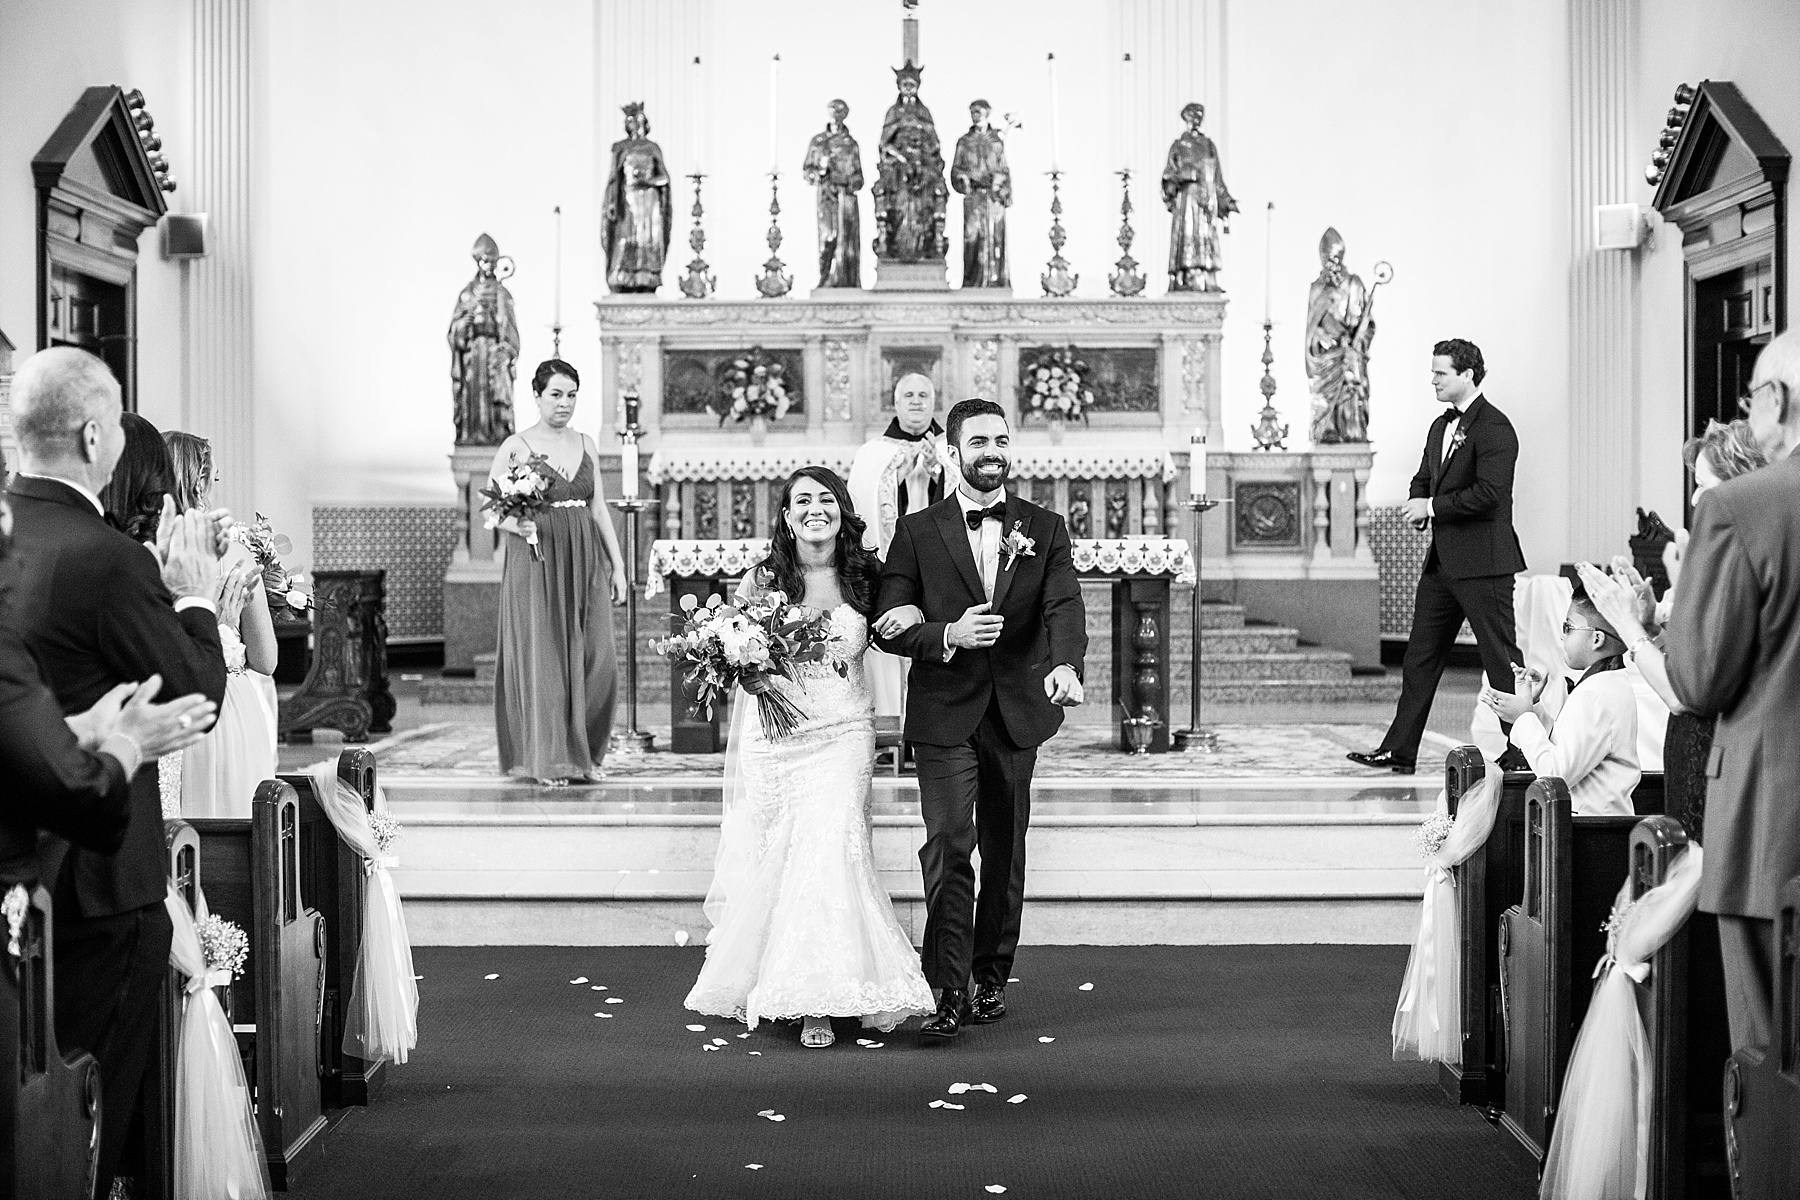 Alexandra Mandato Photography photographs St. Casimir Catholic Church wedding ceremony